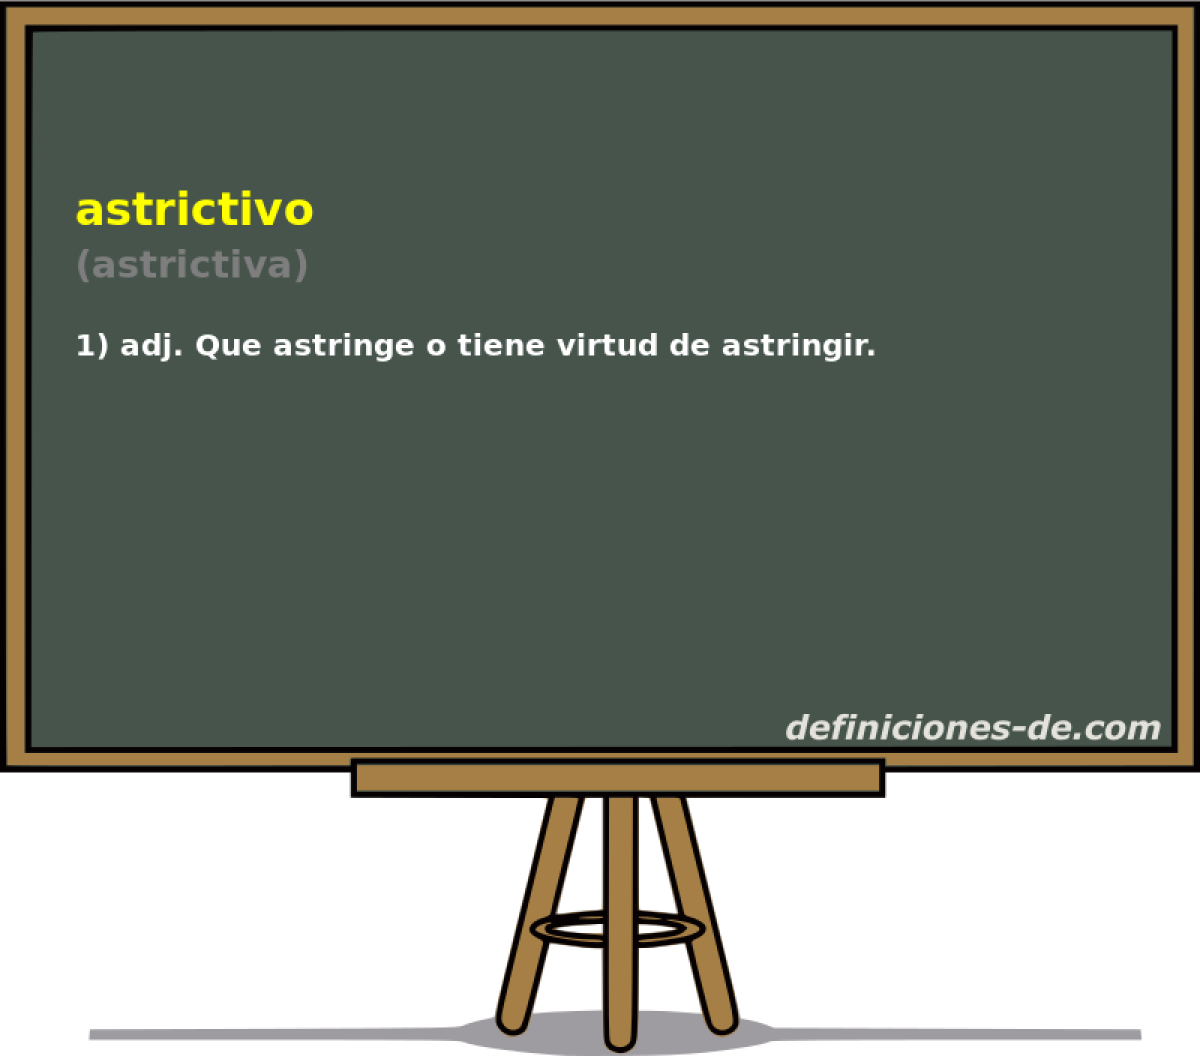 astrictivo (astrictiva)